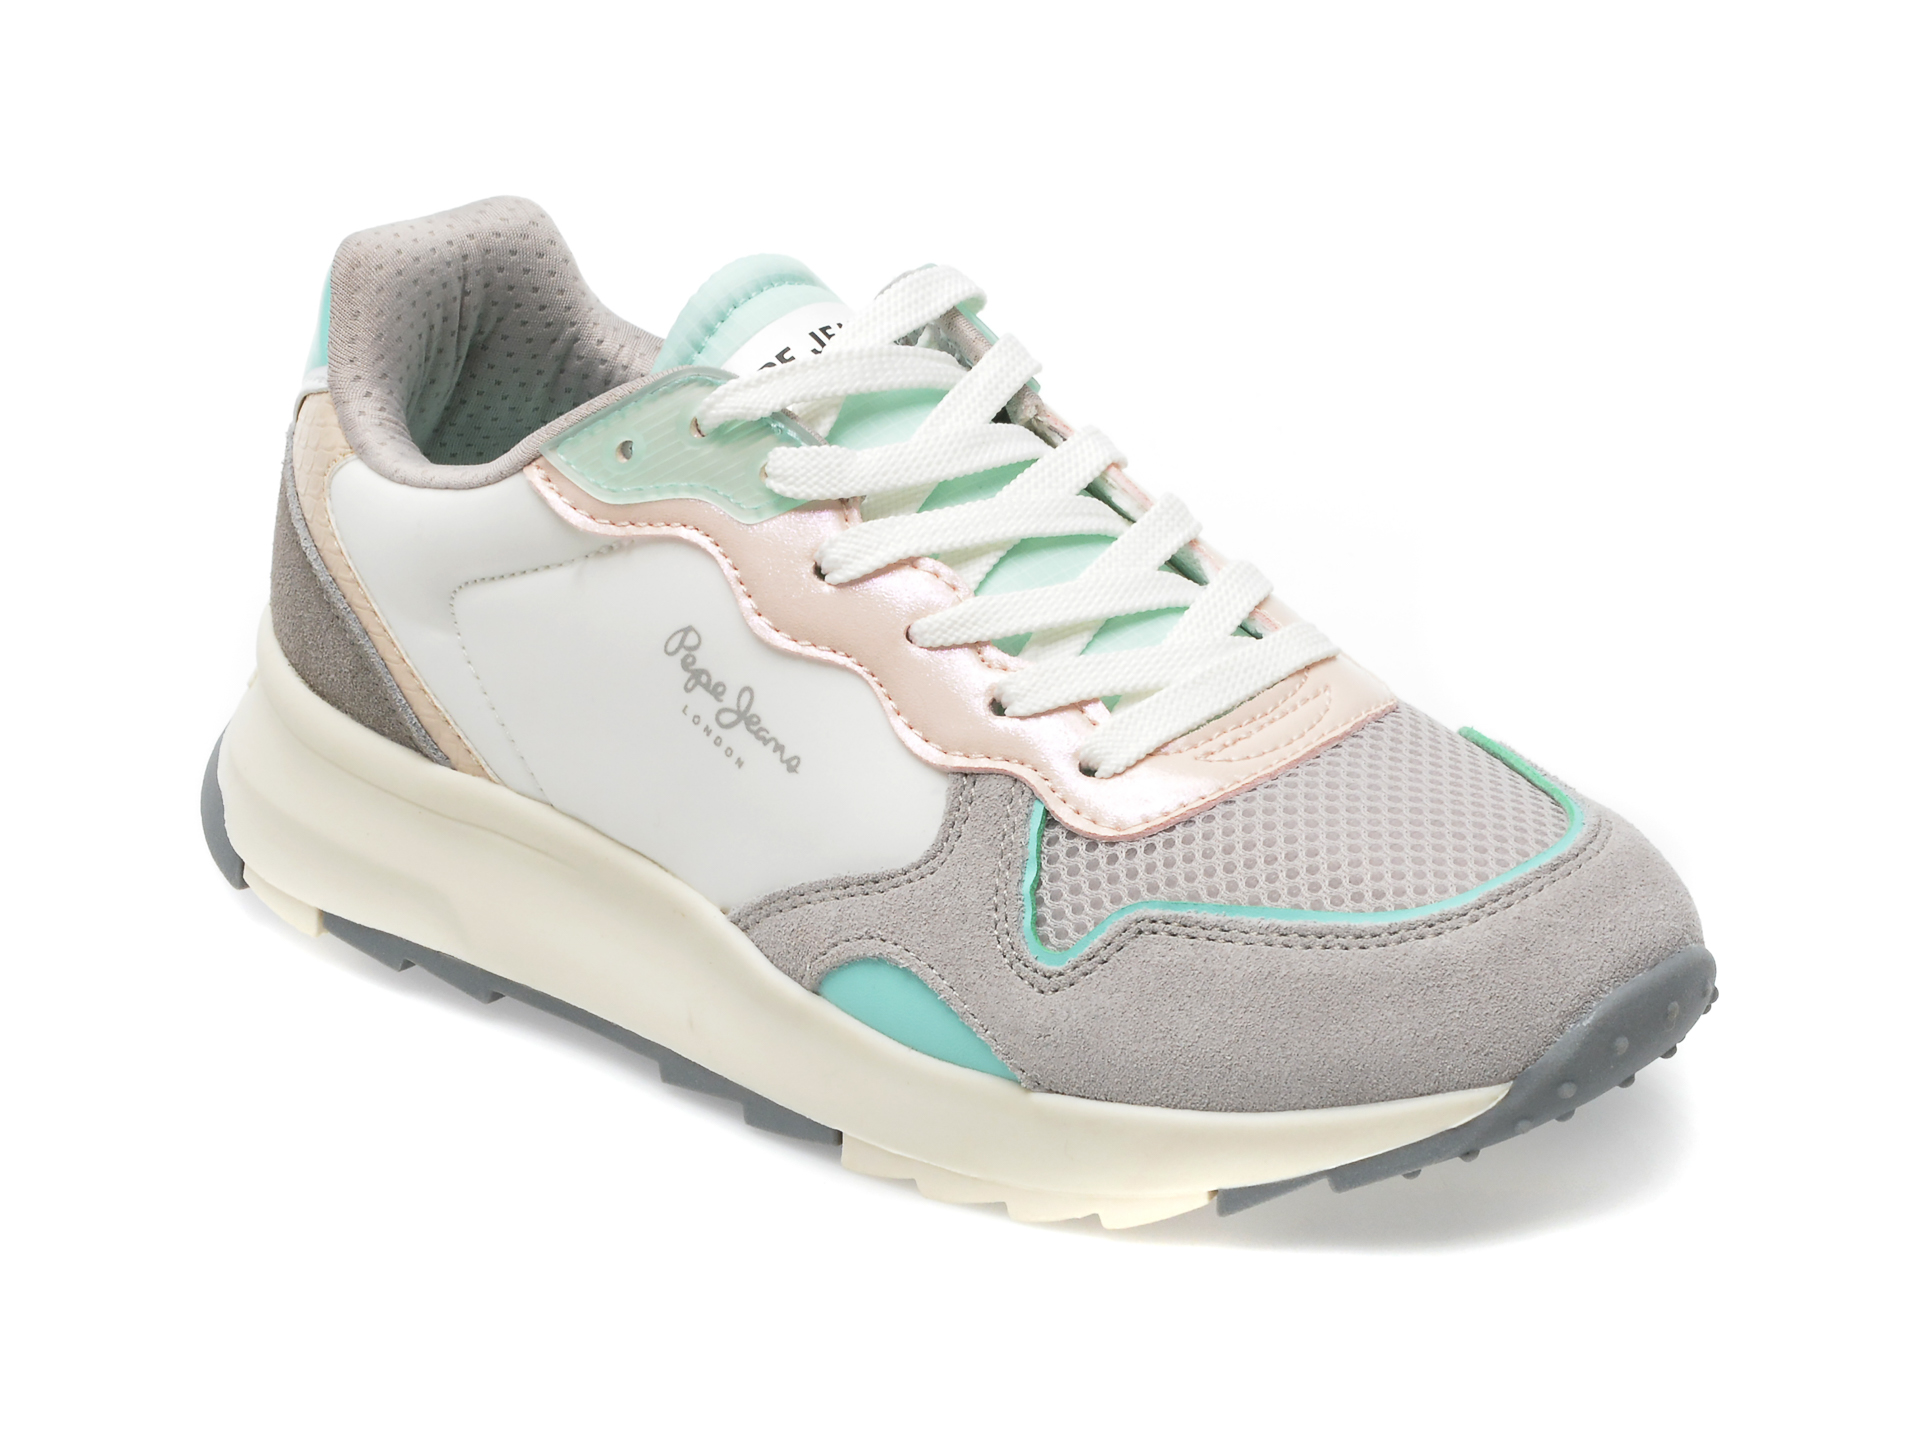 Pantofi sport PEPE JEANS multicolori, LS31452, din piele intoarsa si material textil Answear 2023-06-04